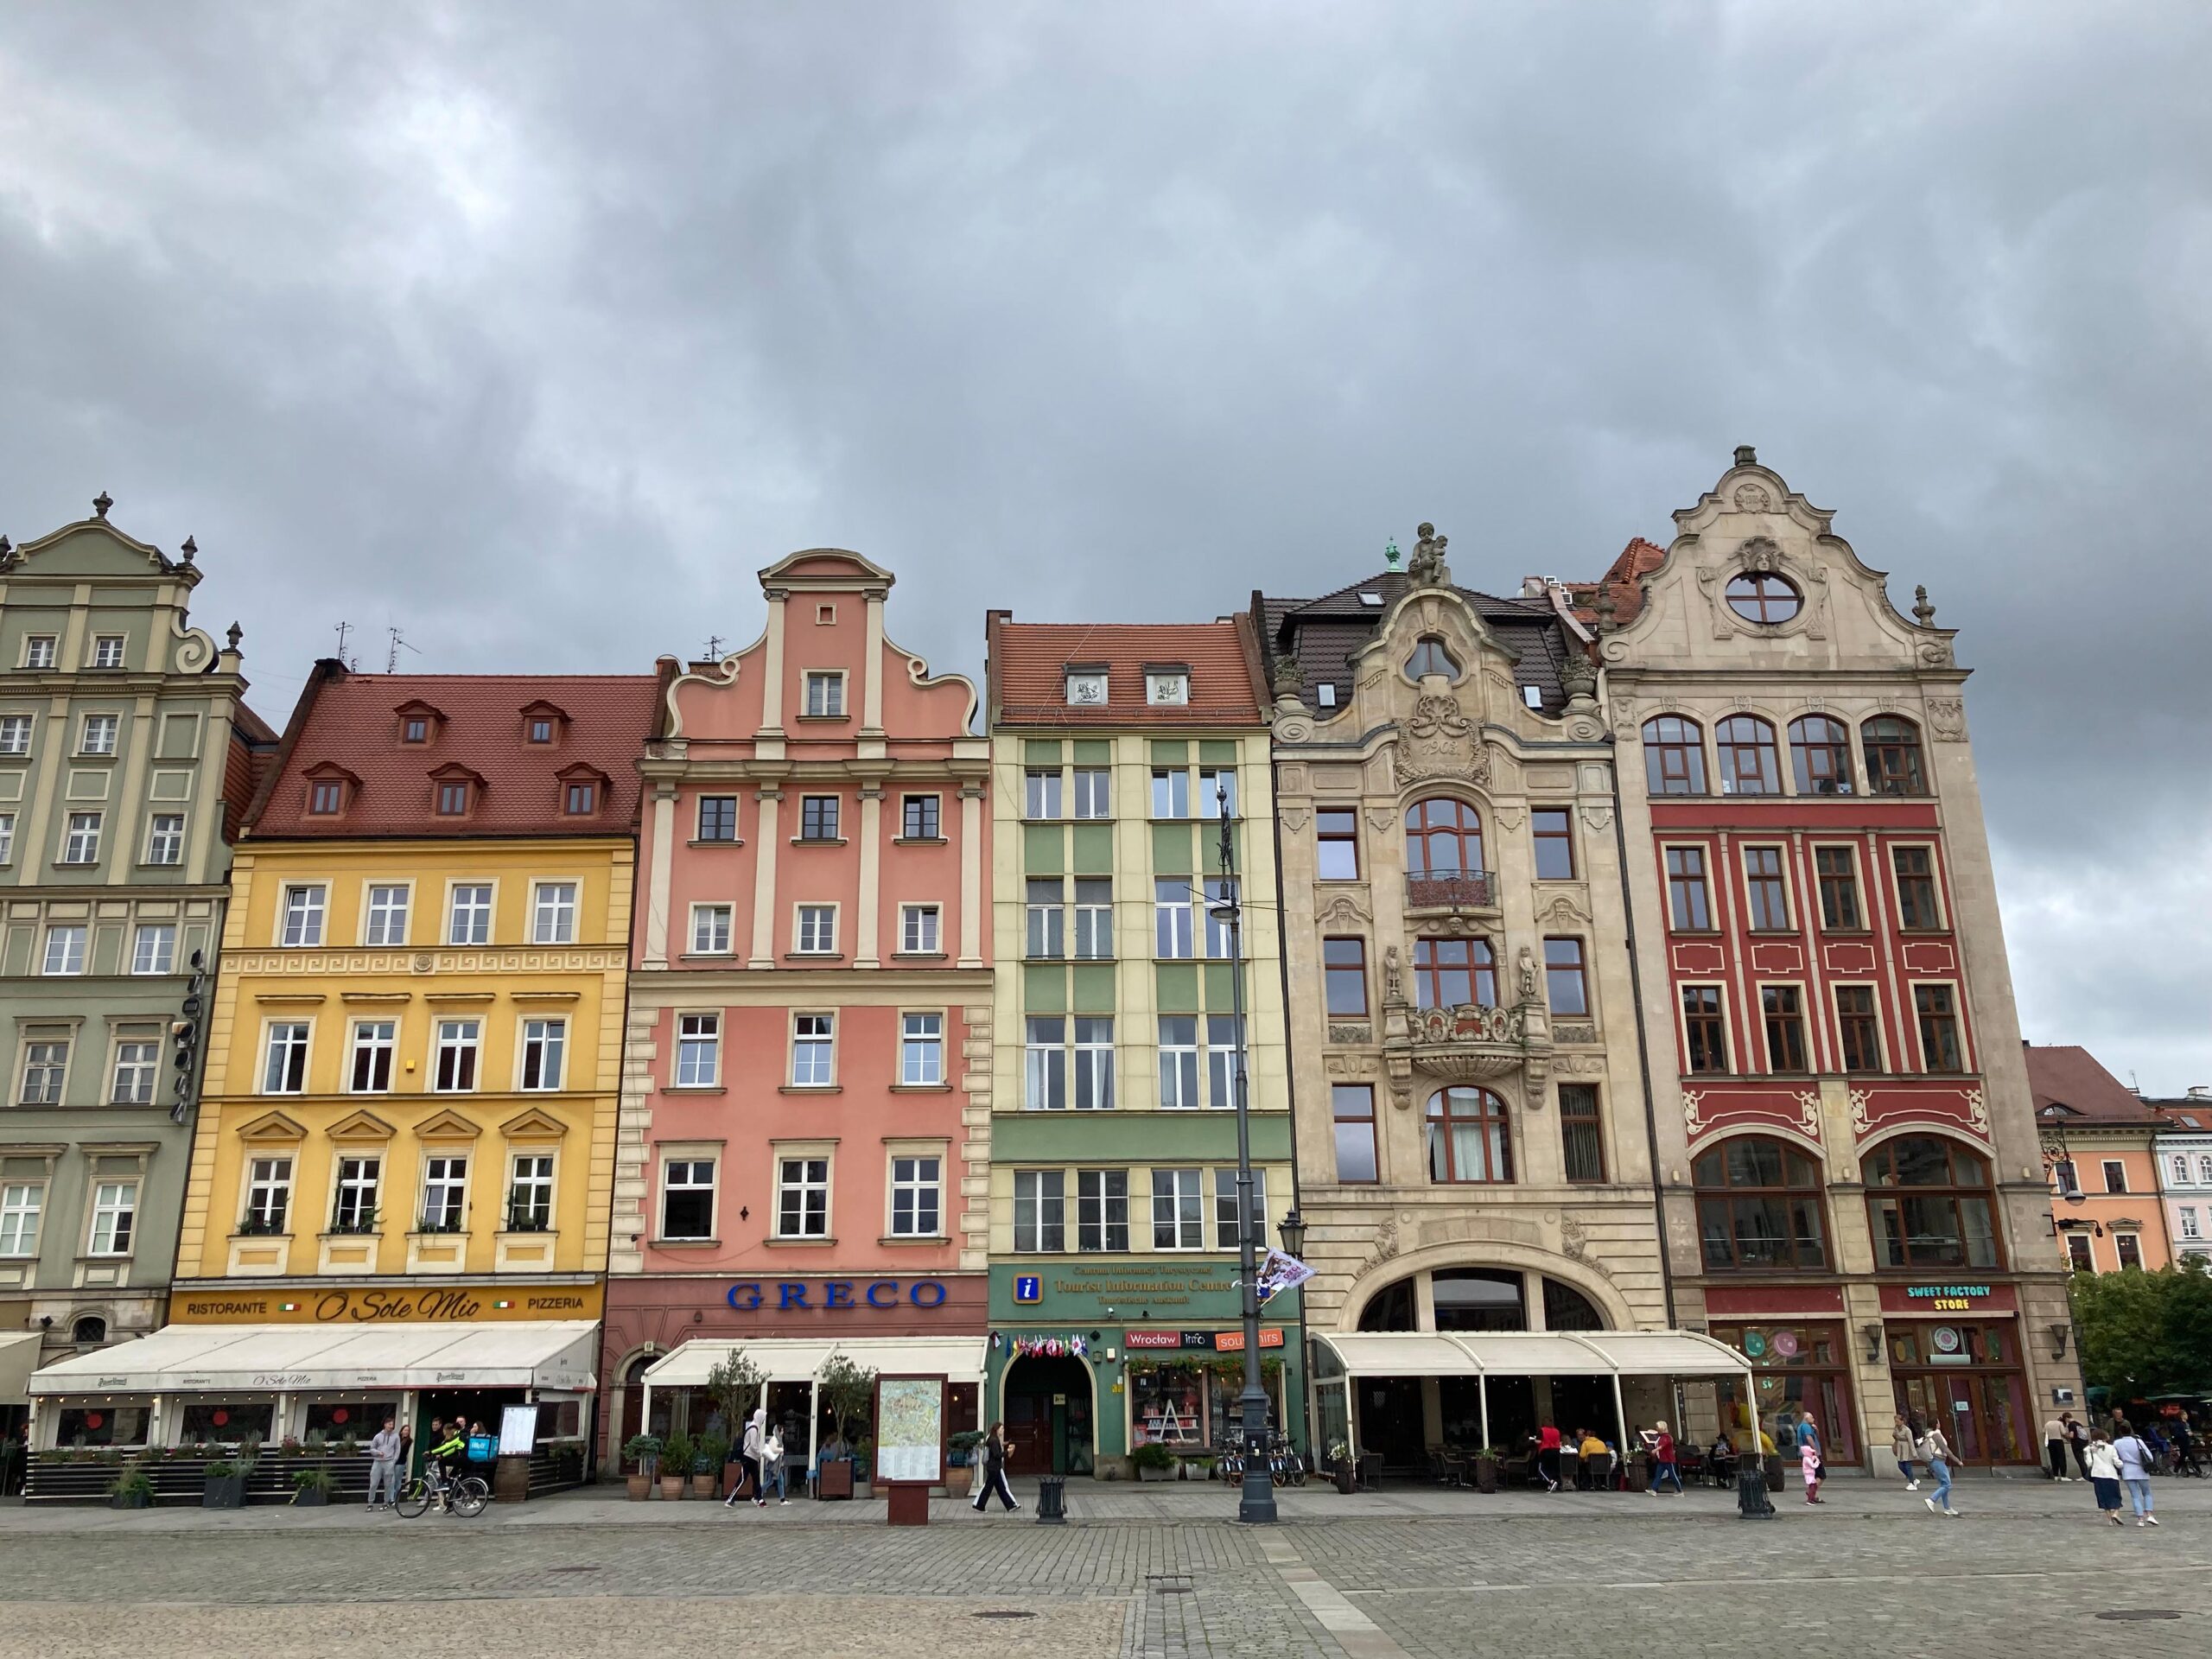 The beautiful market square in Wrocław.